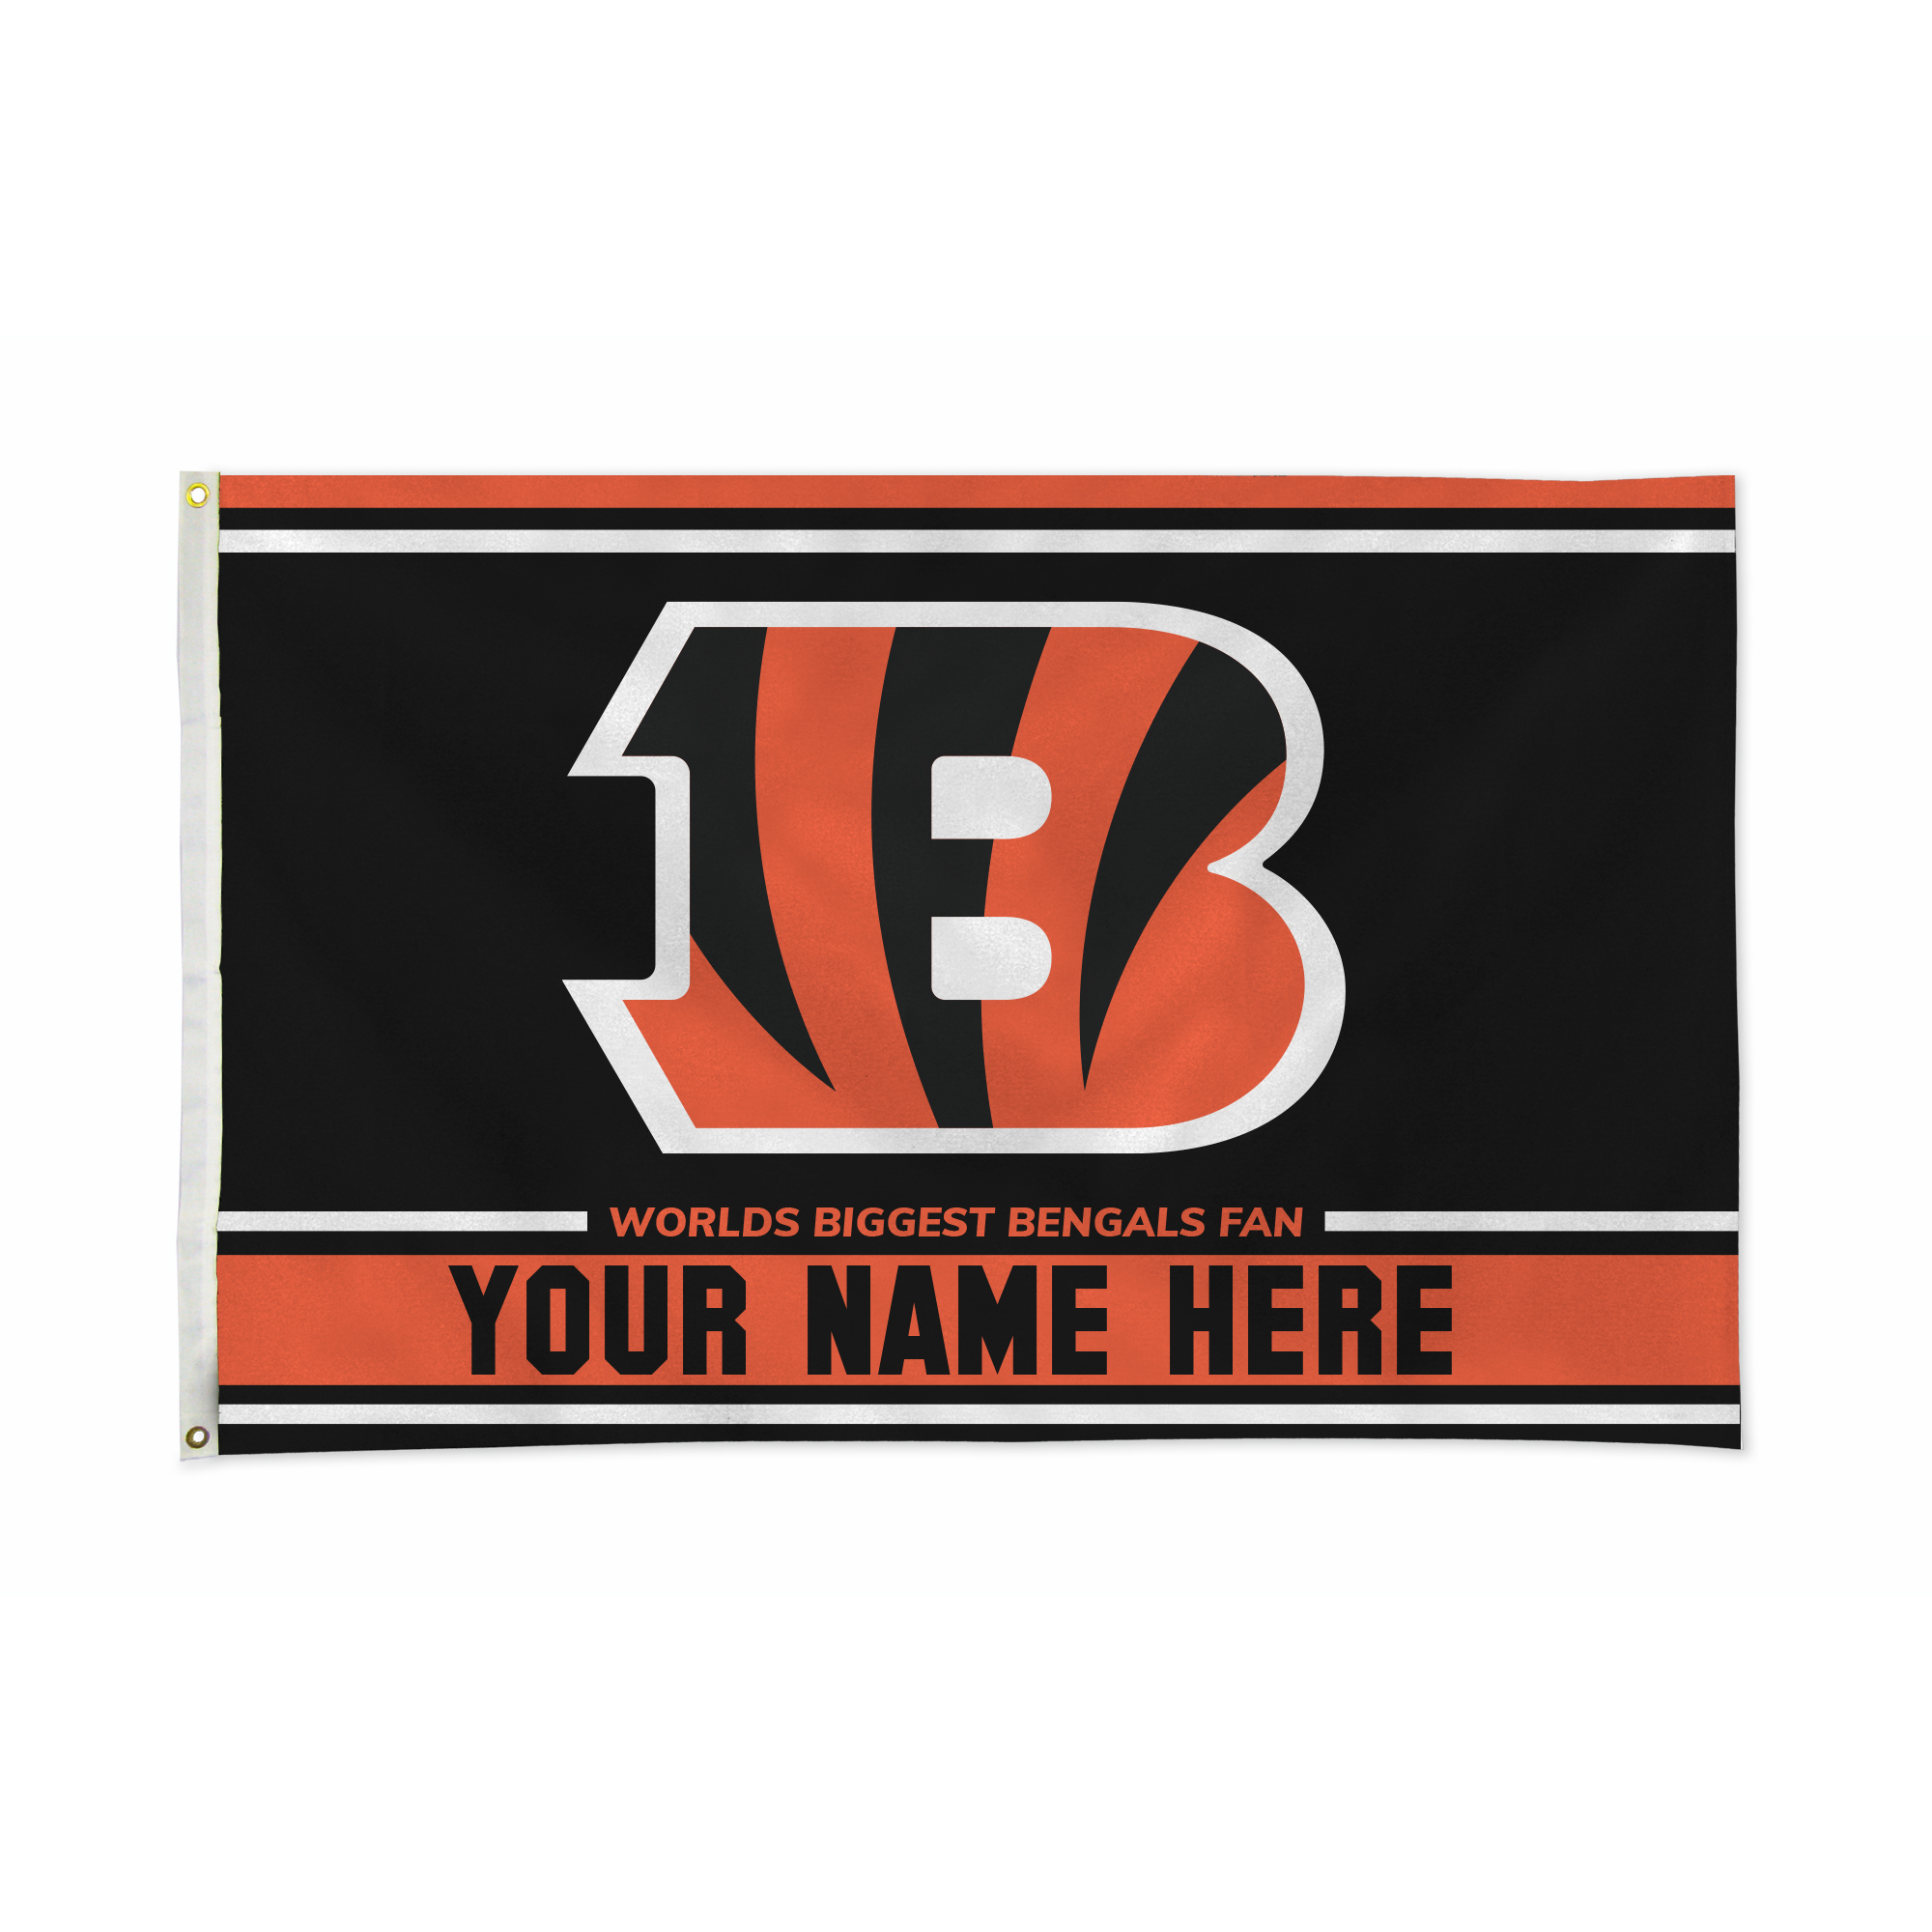 Rico Industries NFL Football Cincinnati Bengals  Personalized 3' x 5' Banner Flag